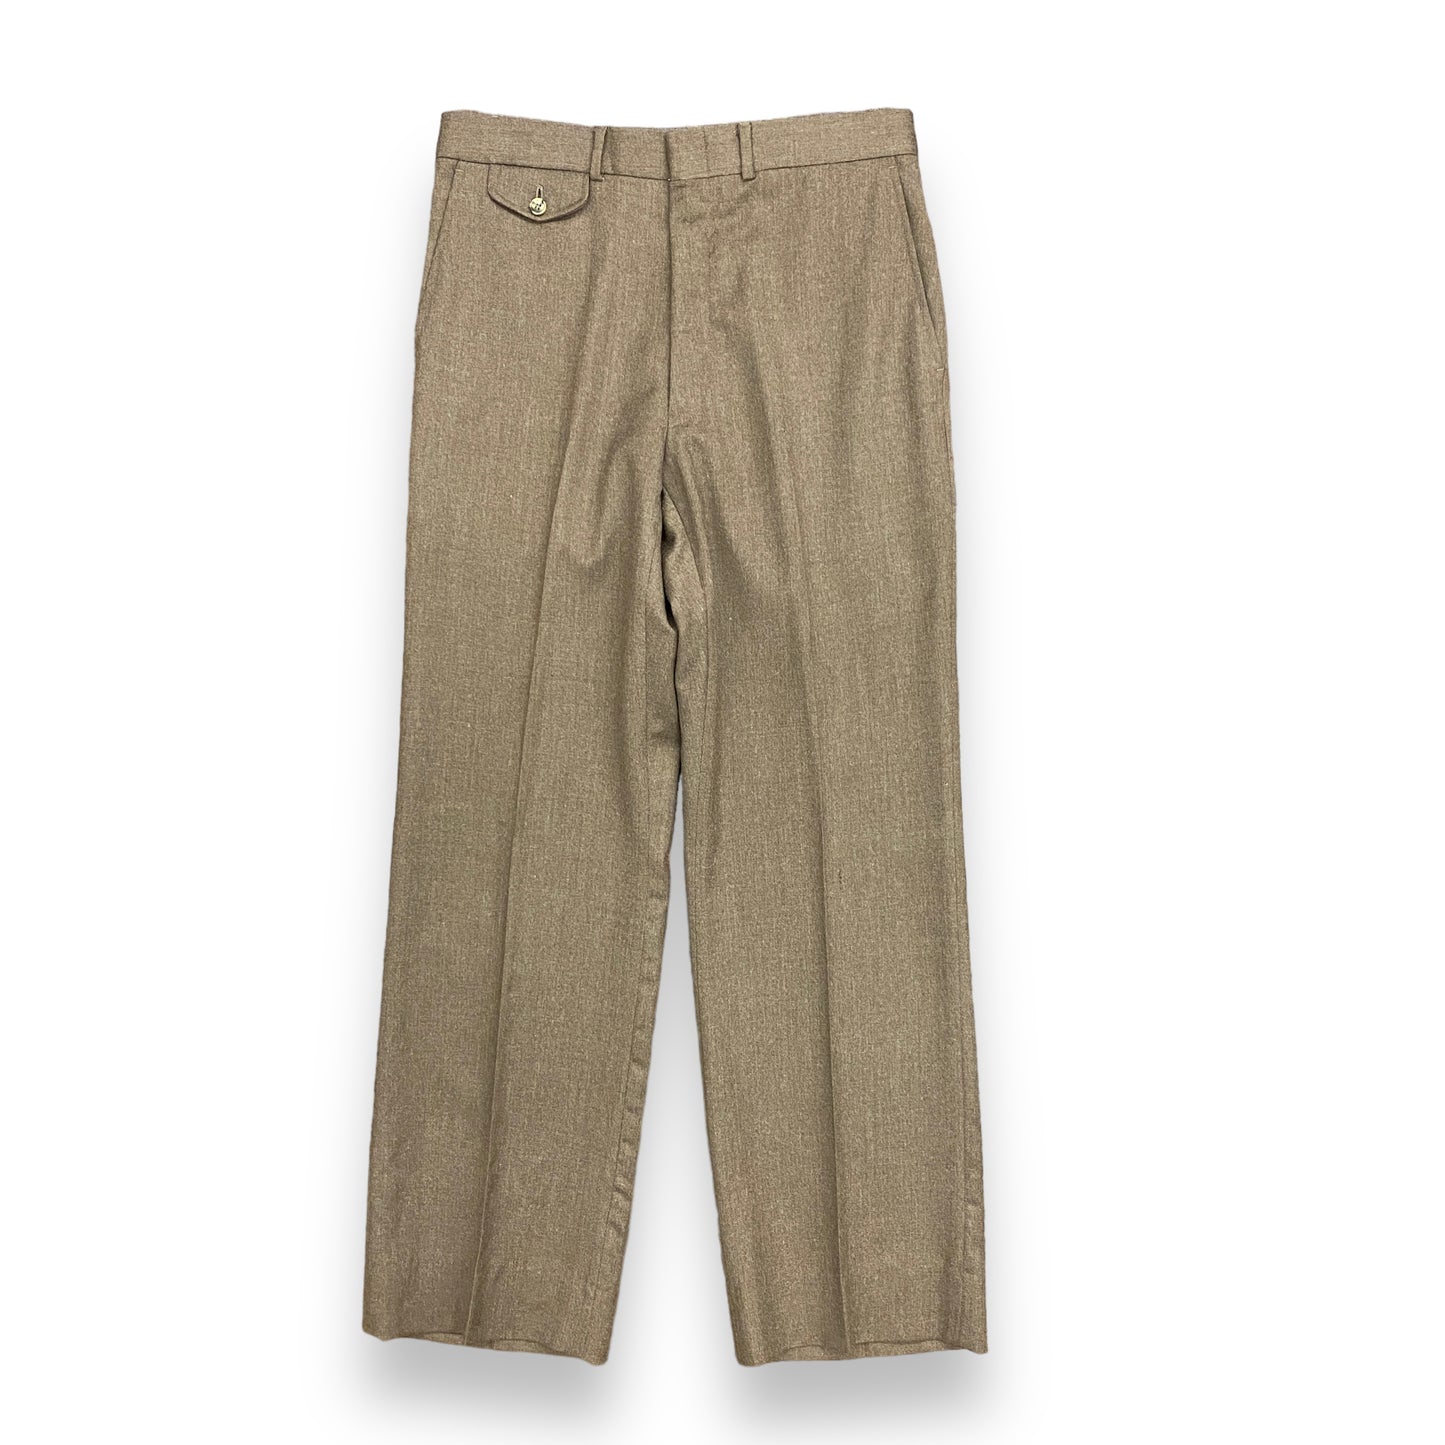 1970s Brown Wool Pants by Homick's Auburn NY - 31"x30"